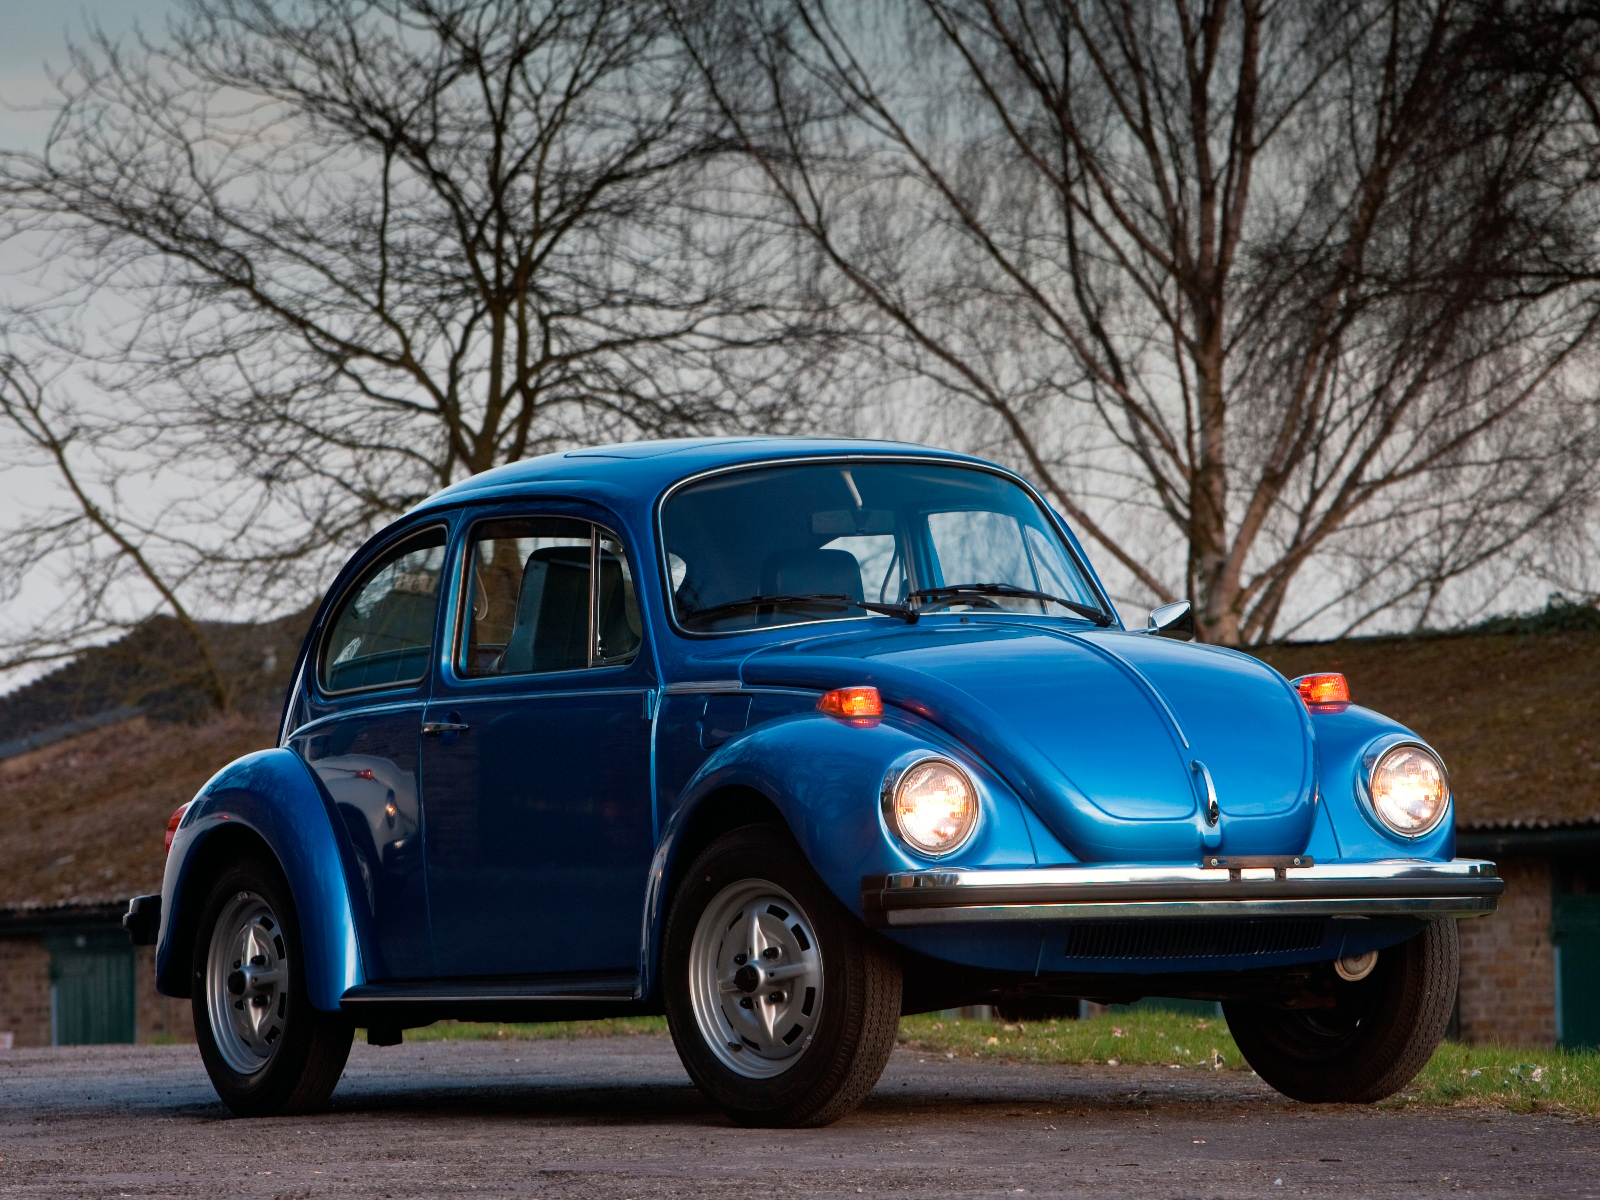 1975 Volkswagen Beetle v w classic wallpaper background